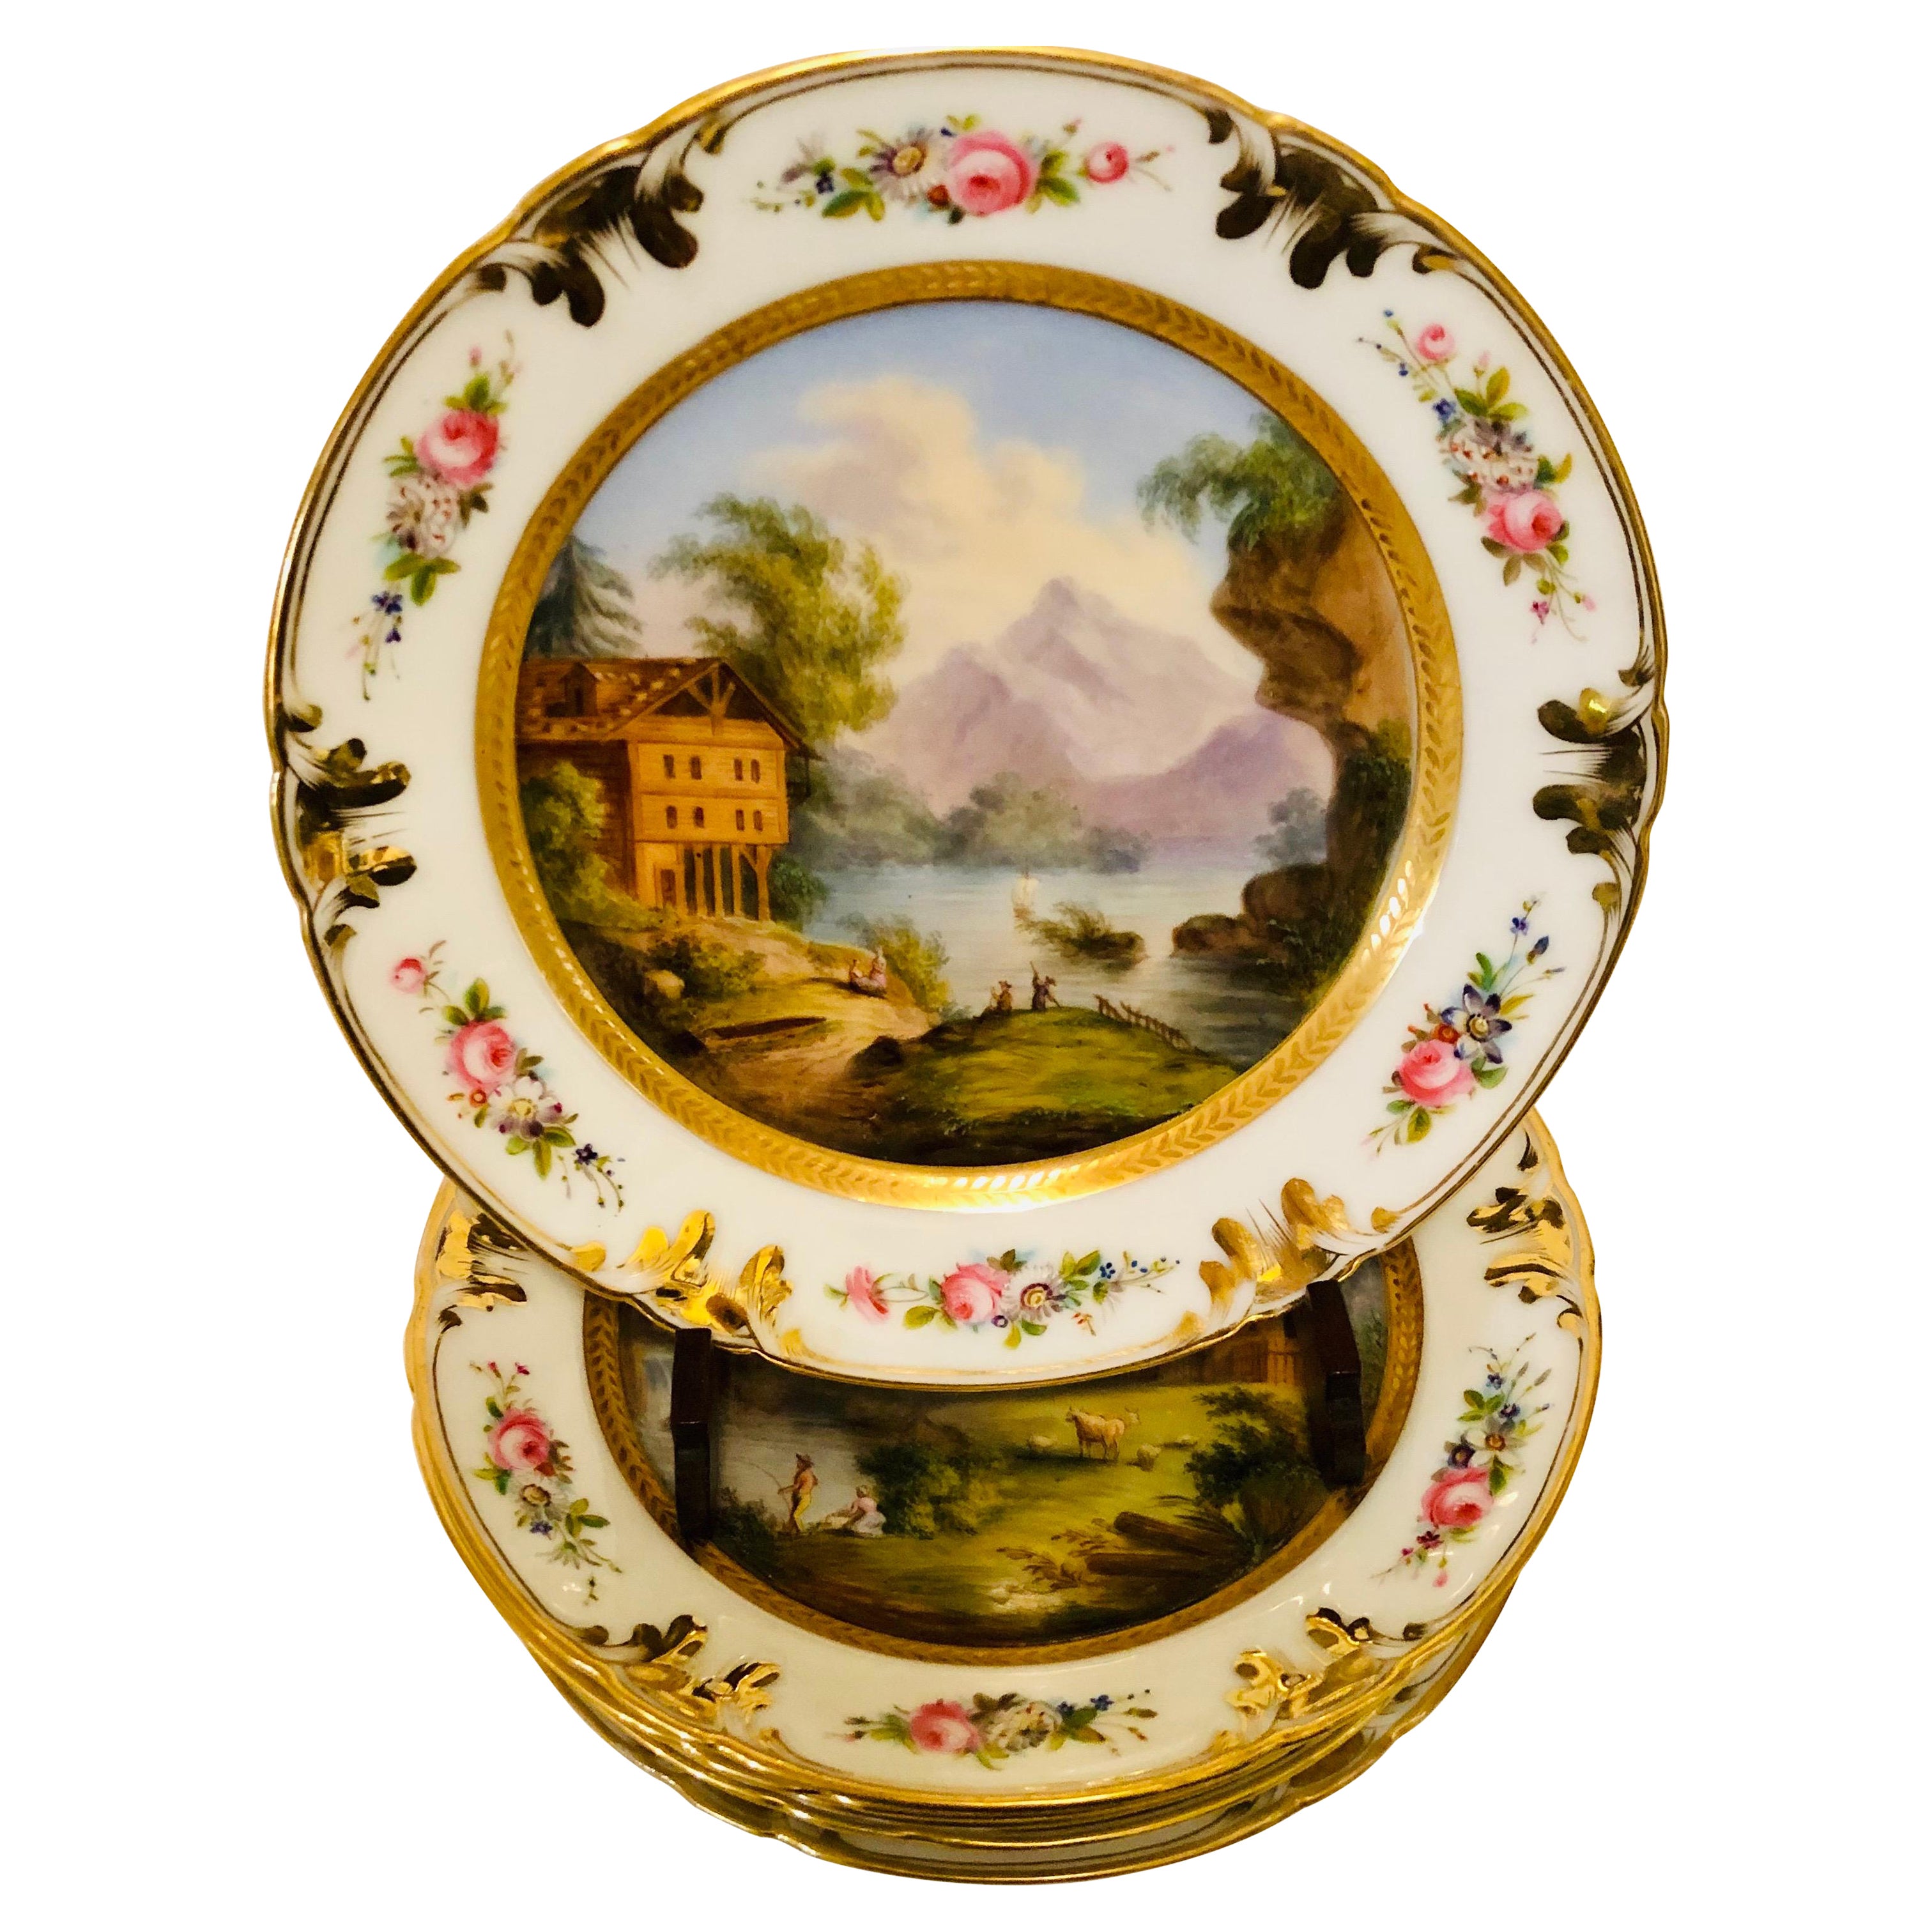 Set of Old Paris Porcelain Plates Each Painted with Different Decorative Scenes